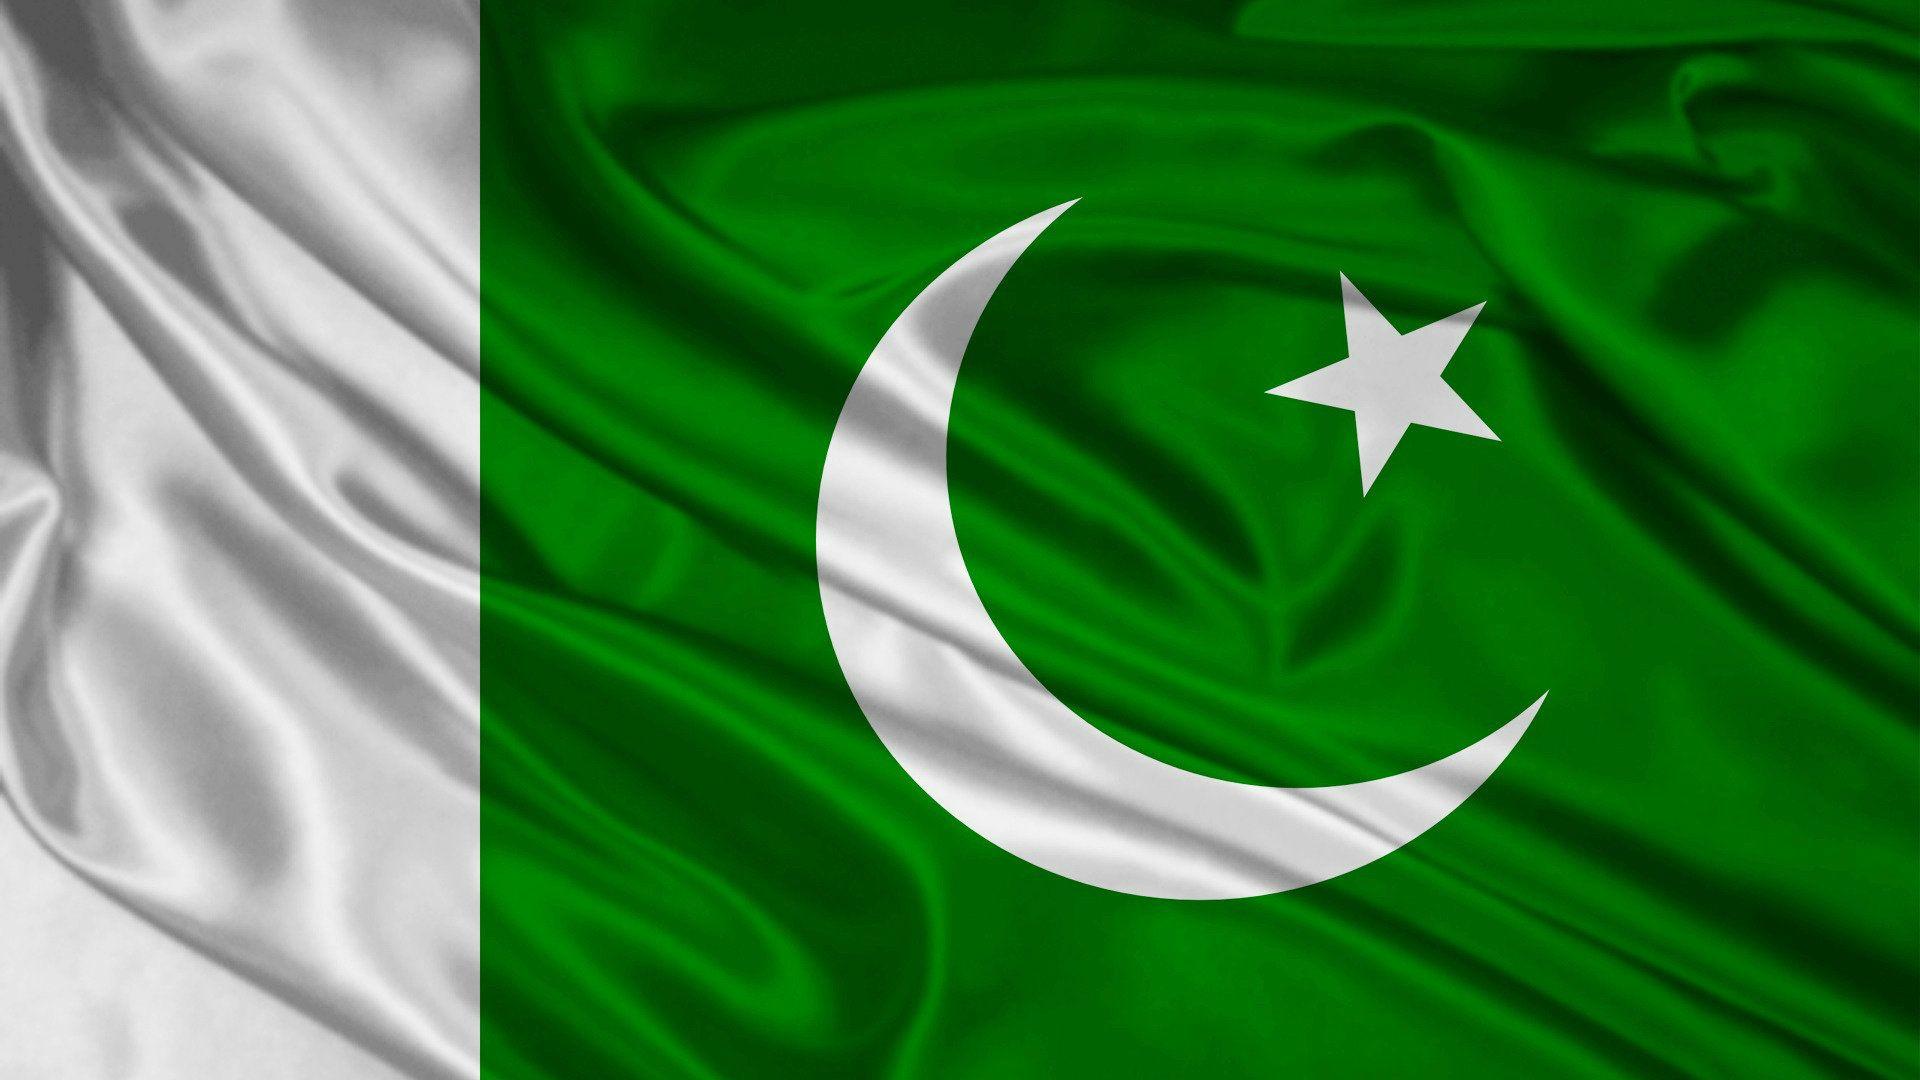 Pakistan Flag HD Wallpaper. Pakistan Flag Image